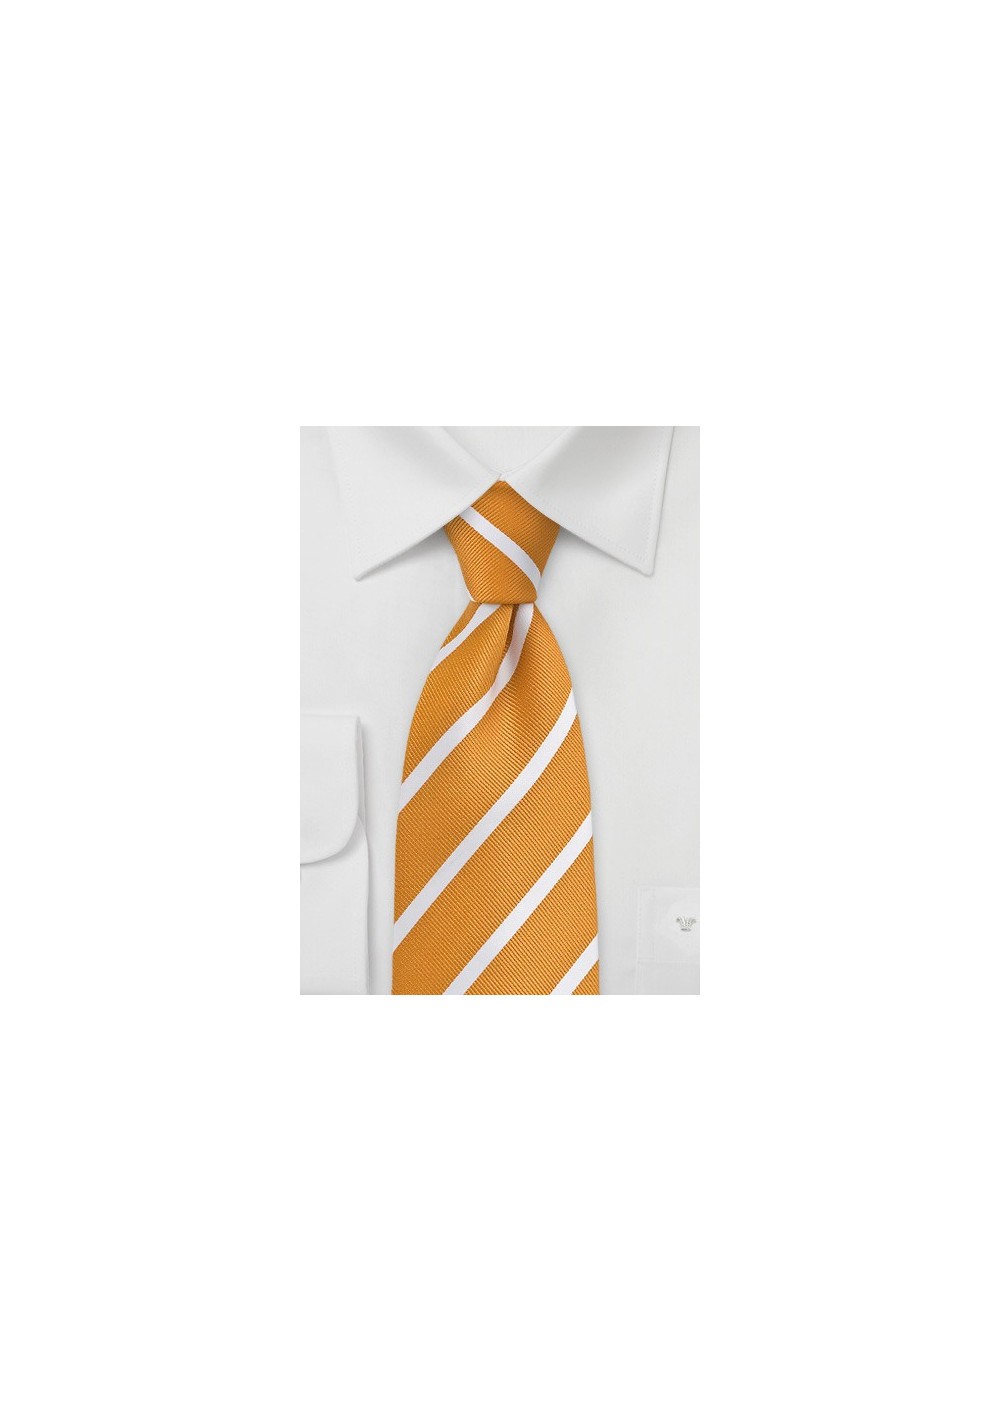 Orange Yellow and White Striped Tie